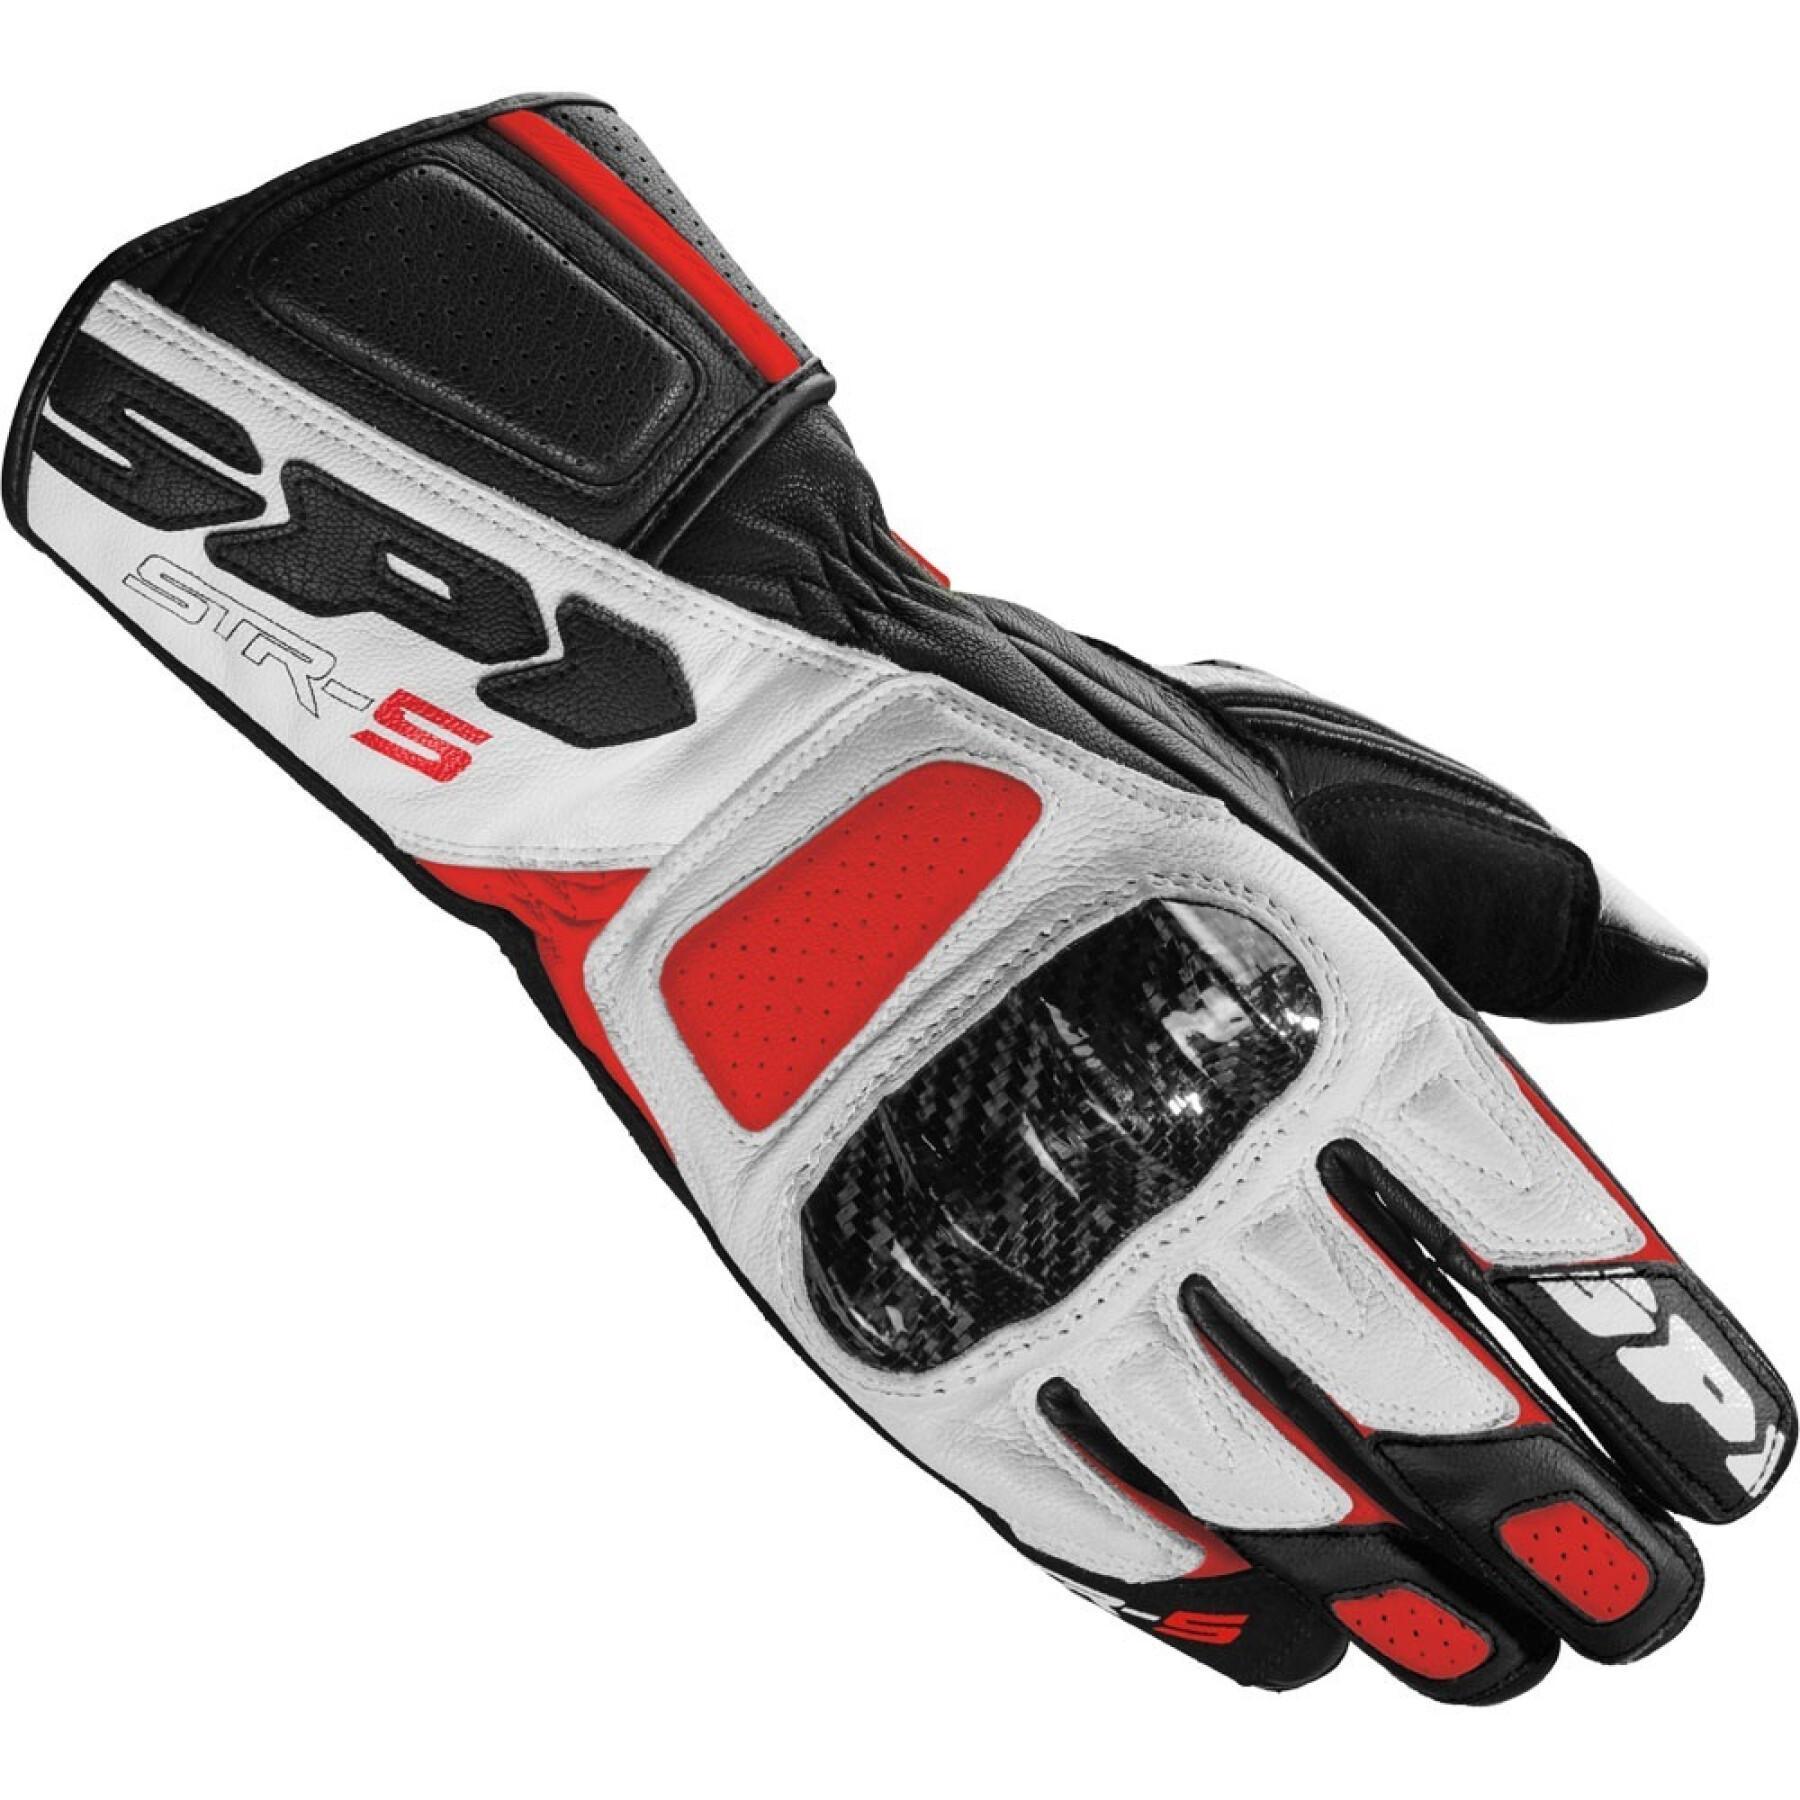 All season motorcycle gloves Spidi STR-5